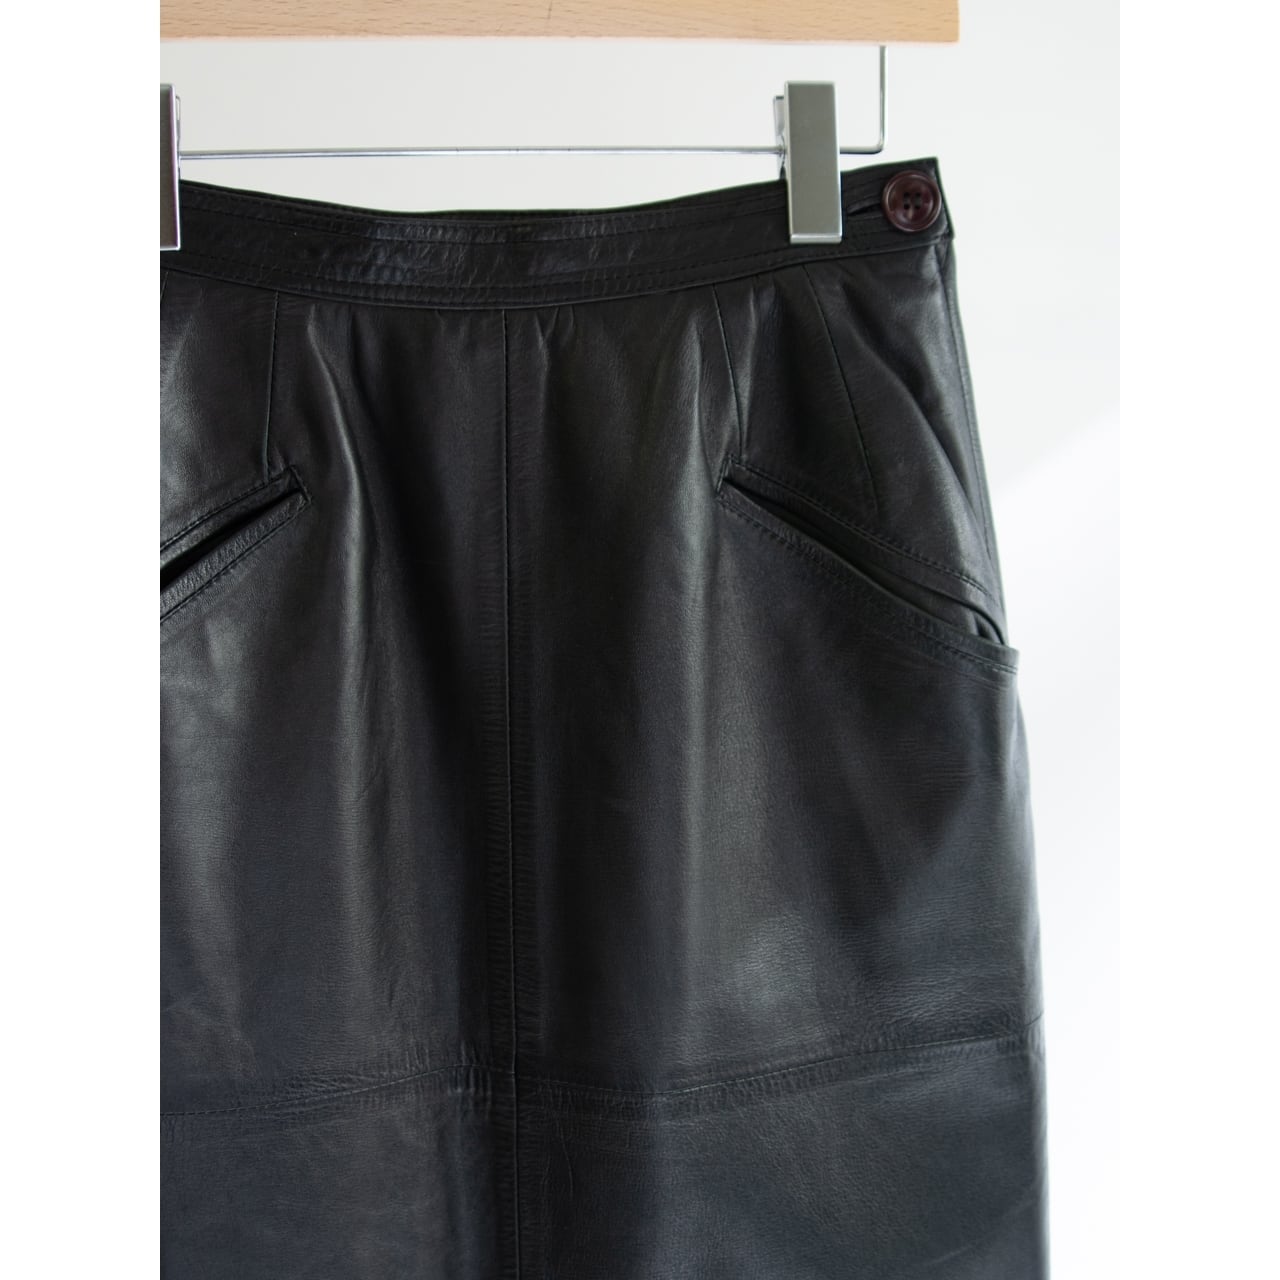 LOEWE】Made in Spain Leather Skirt（ロエベ スペイン製 レザー